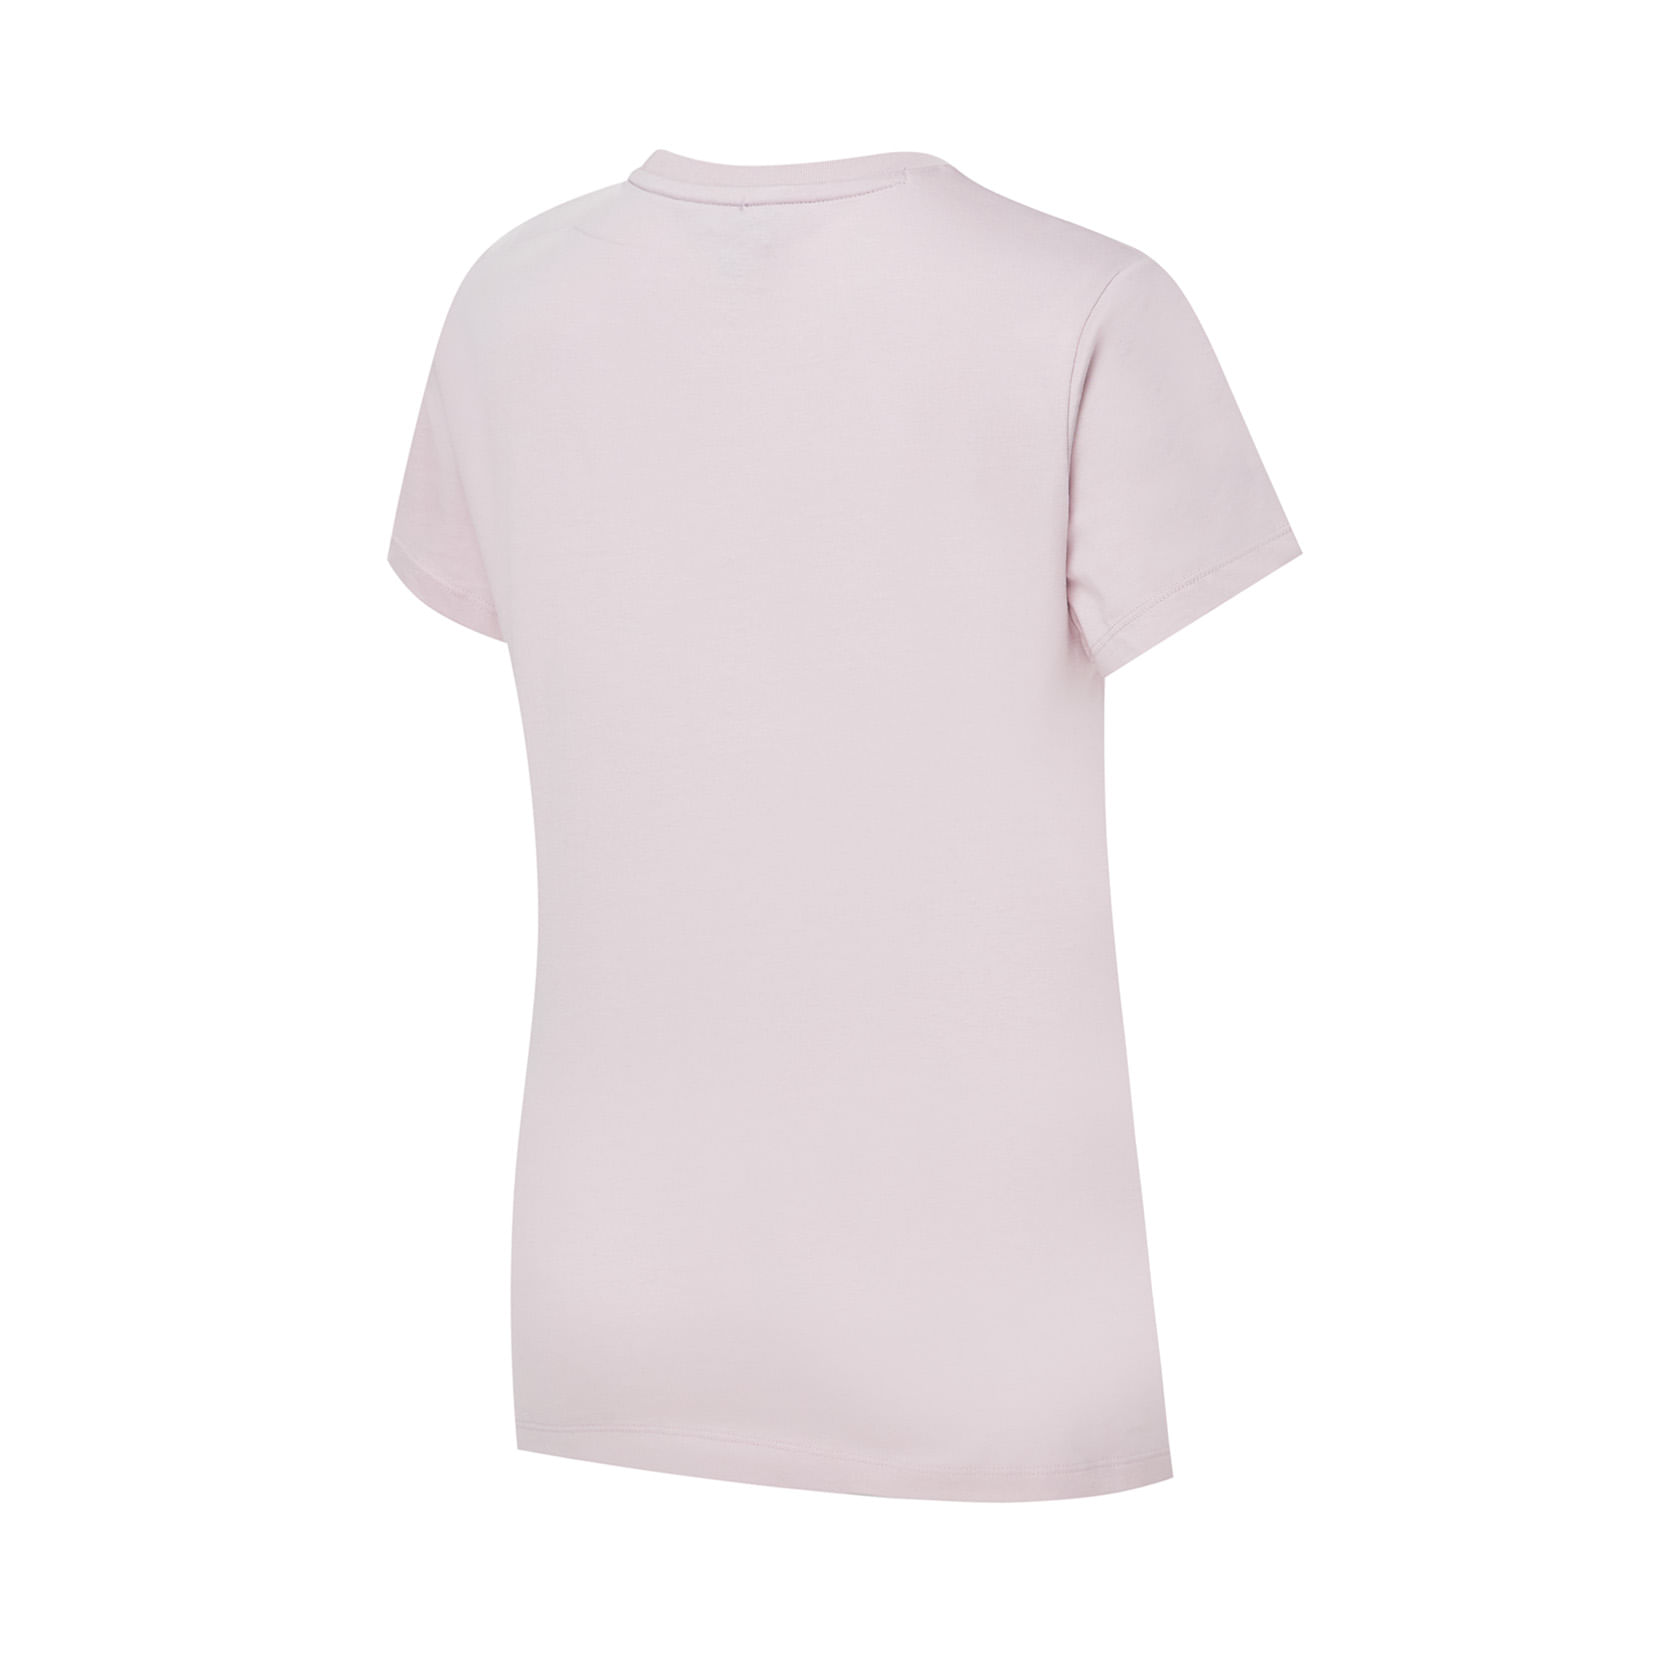 Camiseta Rosada para Entrenar de Mujer - Balance Sport - Balance